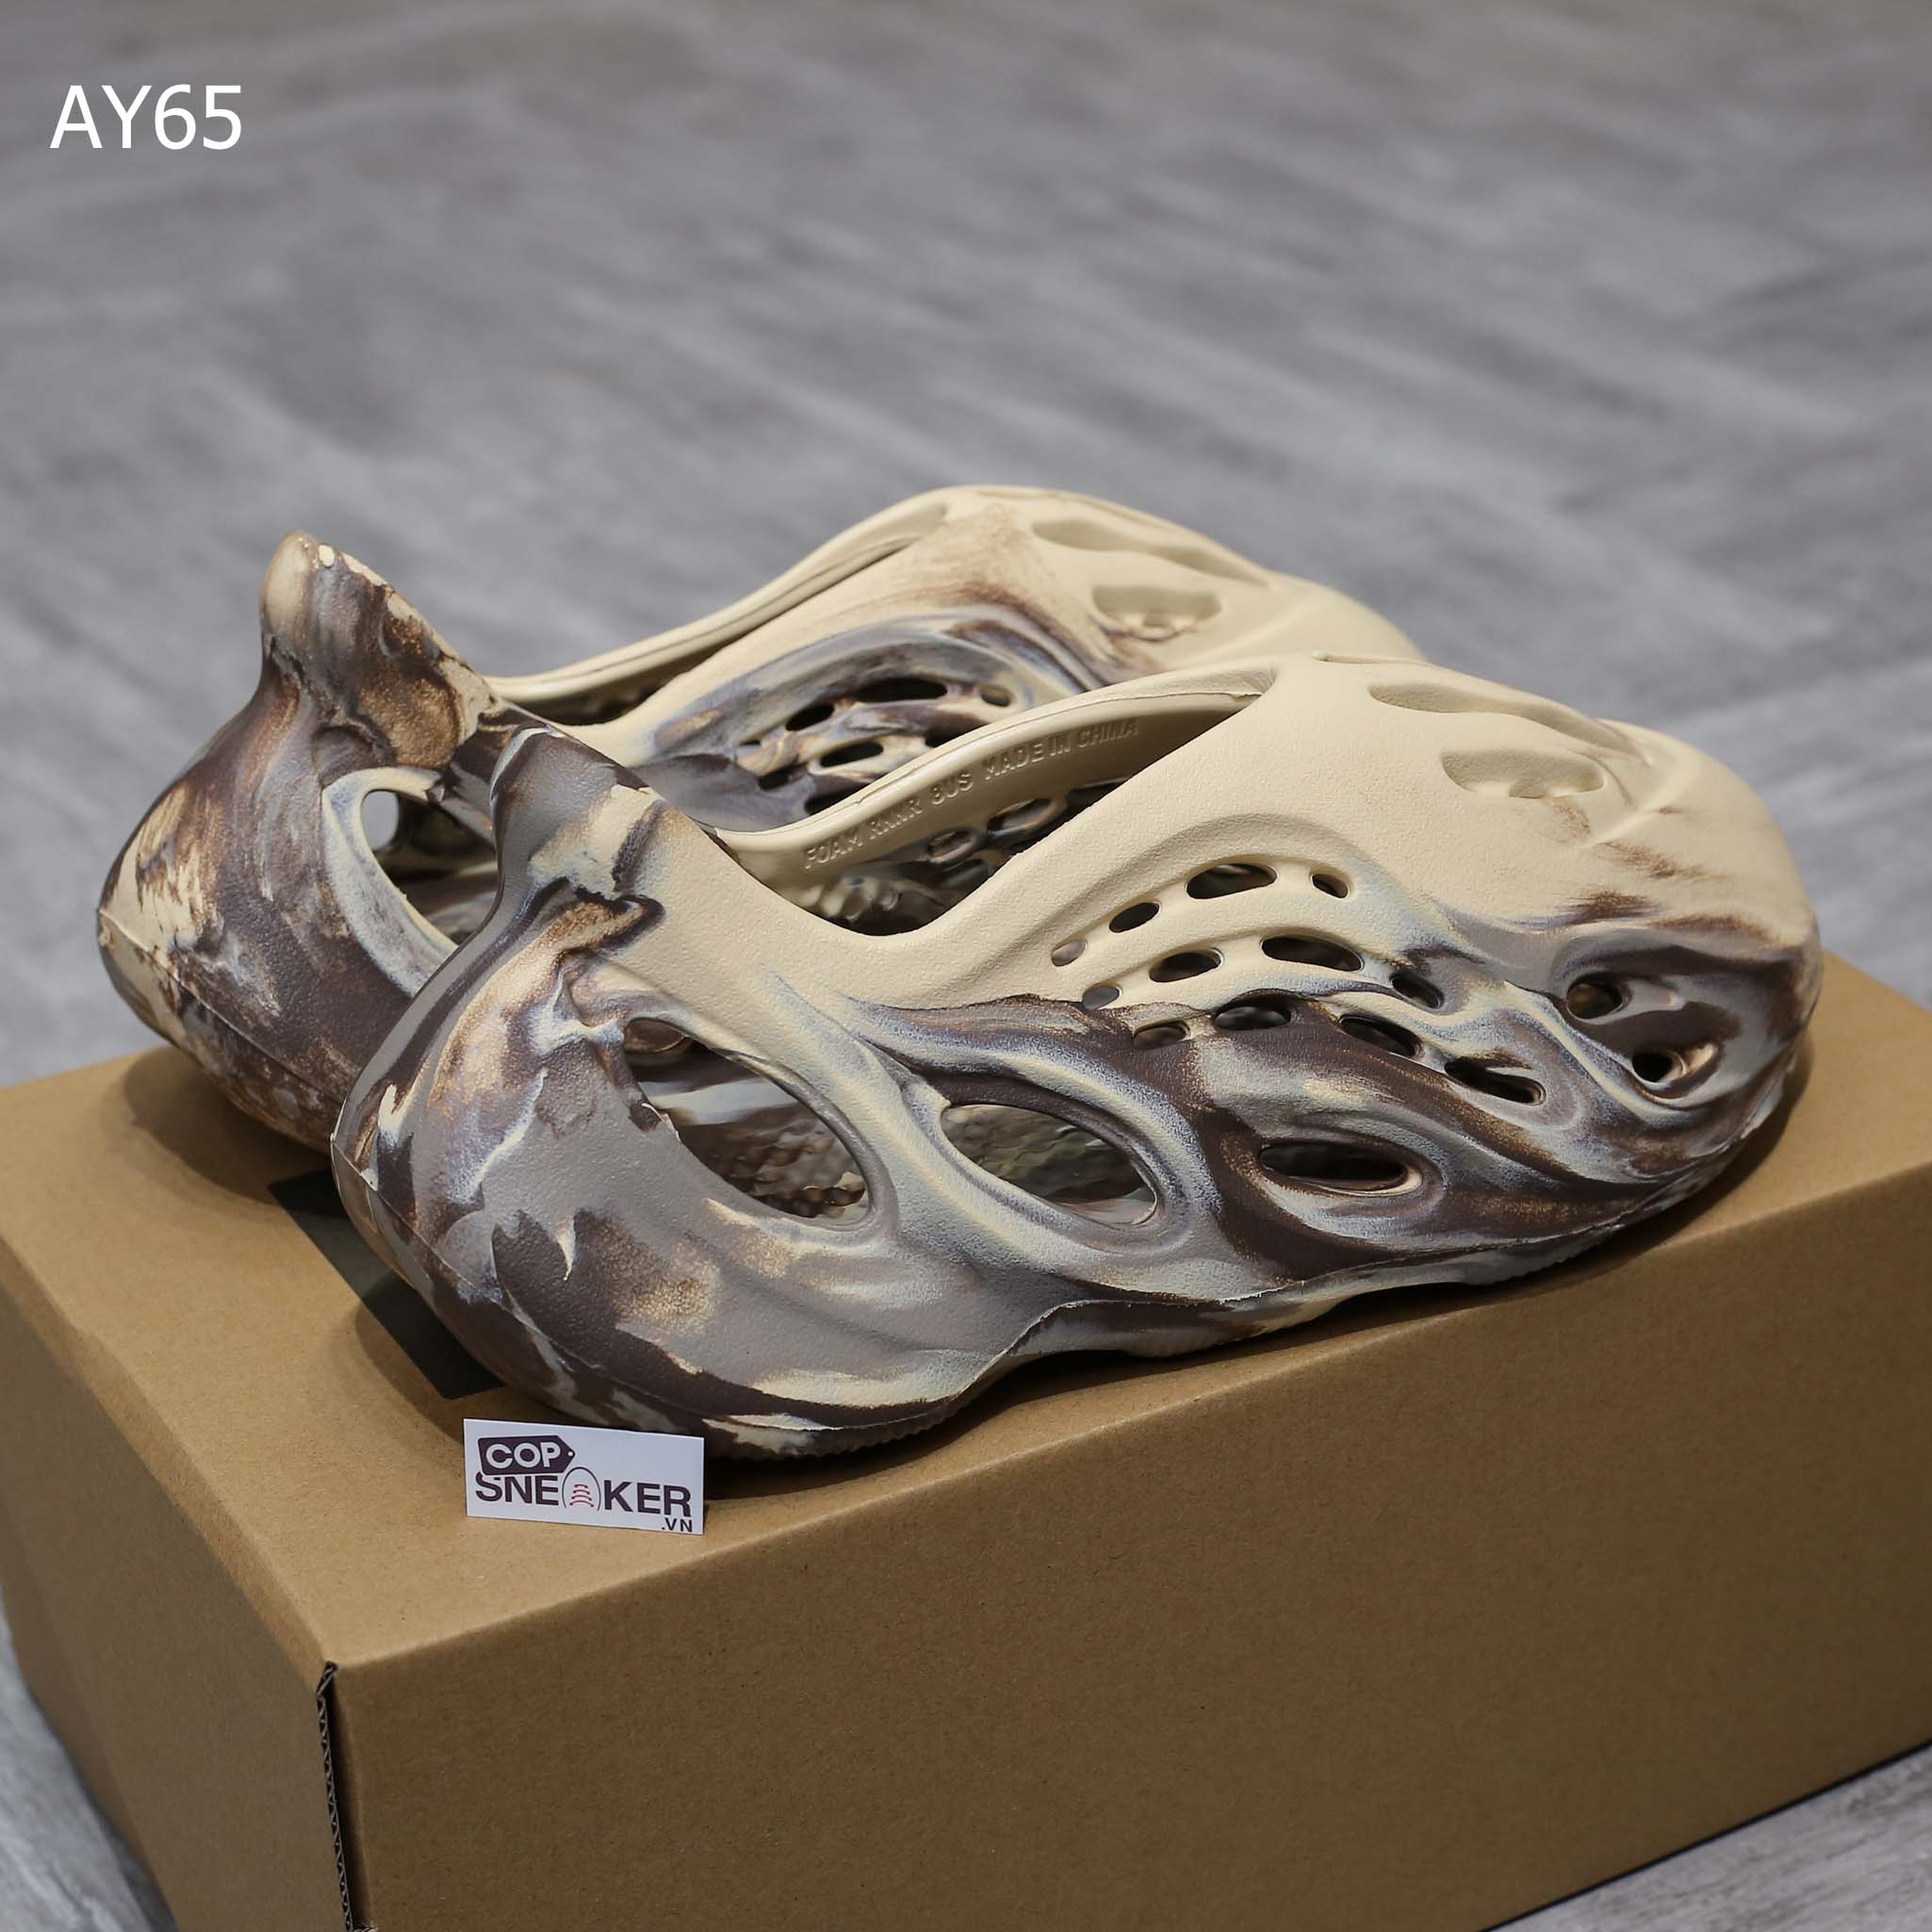 Giày Adidas Yeezy Foam Runner ‘MX Cream Clay’ rep 1:1